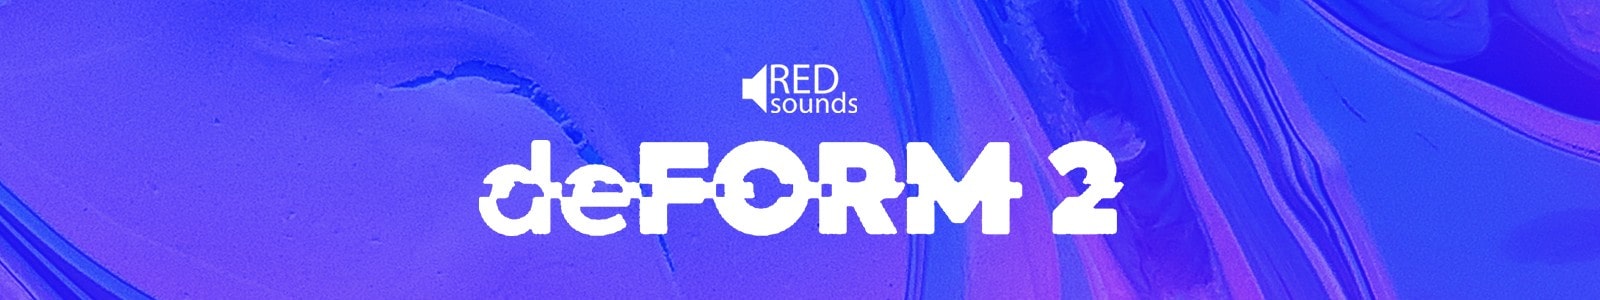 Red Sounds deForm 2 FX Plugin